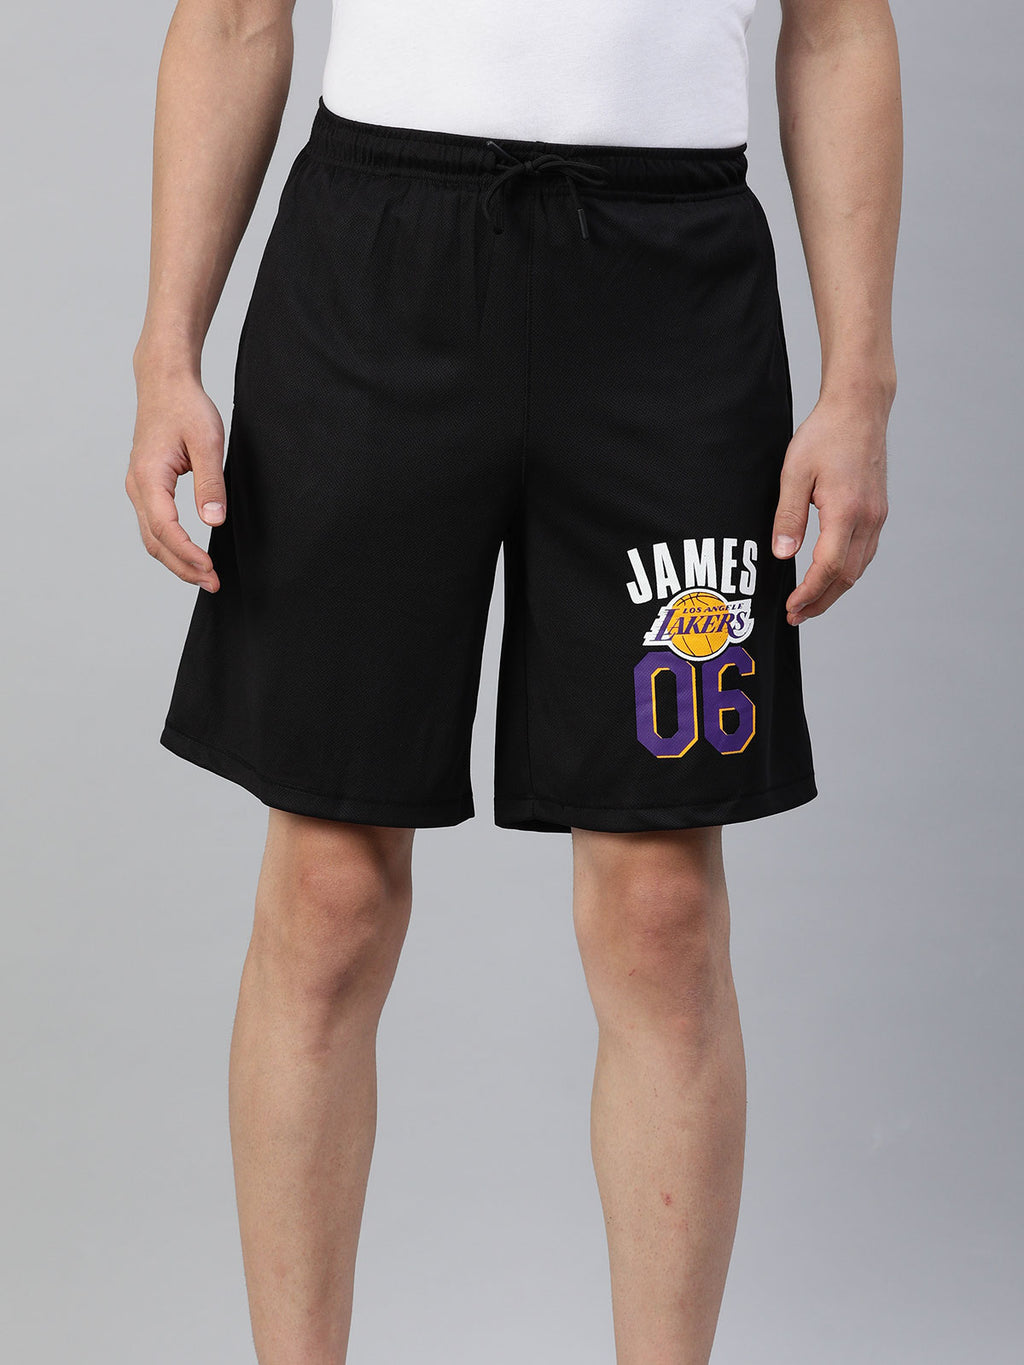 Lebron James LA Lakers Basketball Shorts - Size India